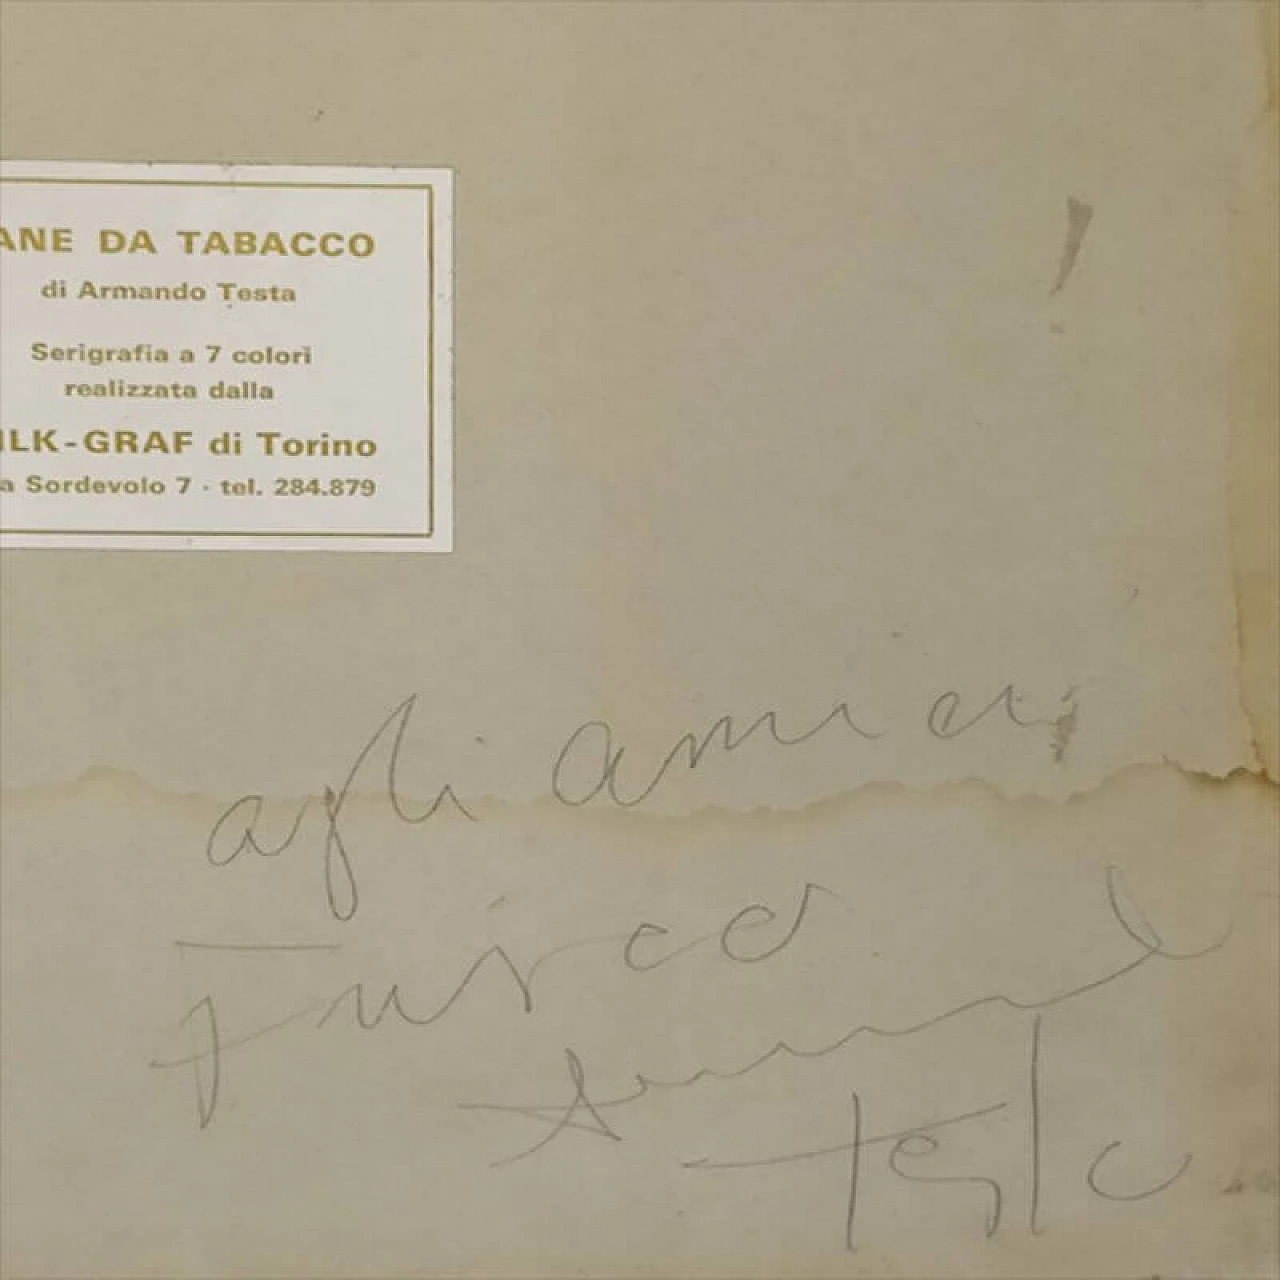 Serigraphy Cane da Tabacco by Armando Testa, 1970s 1123951